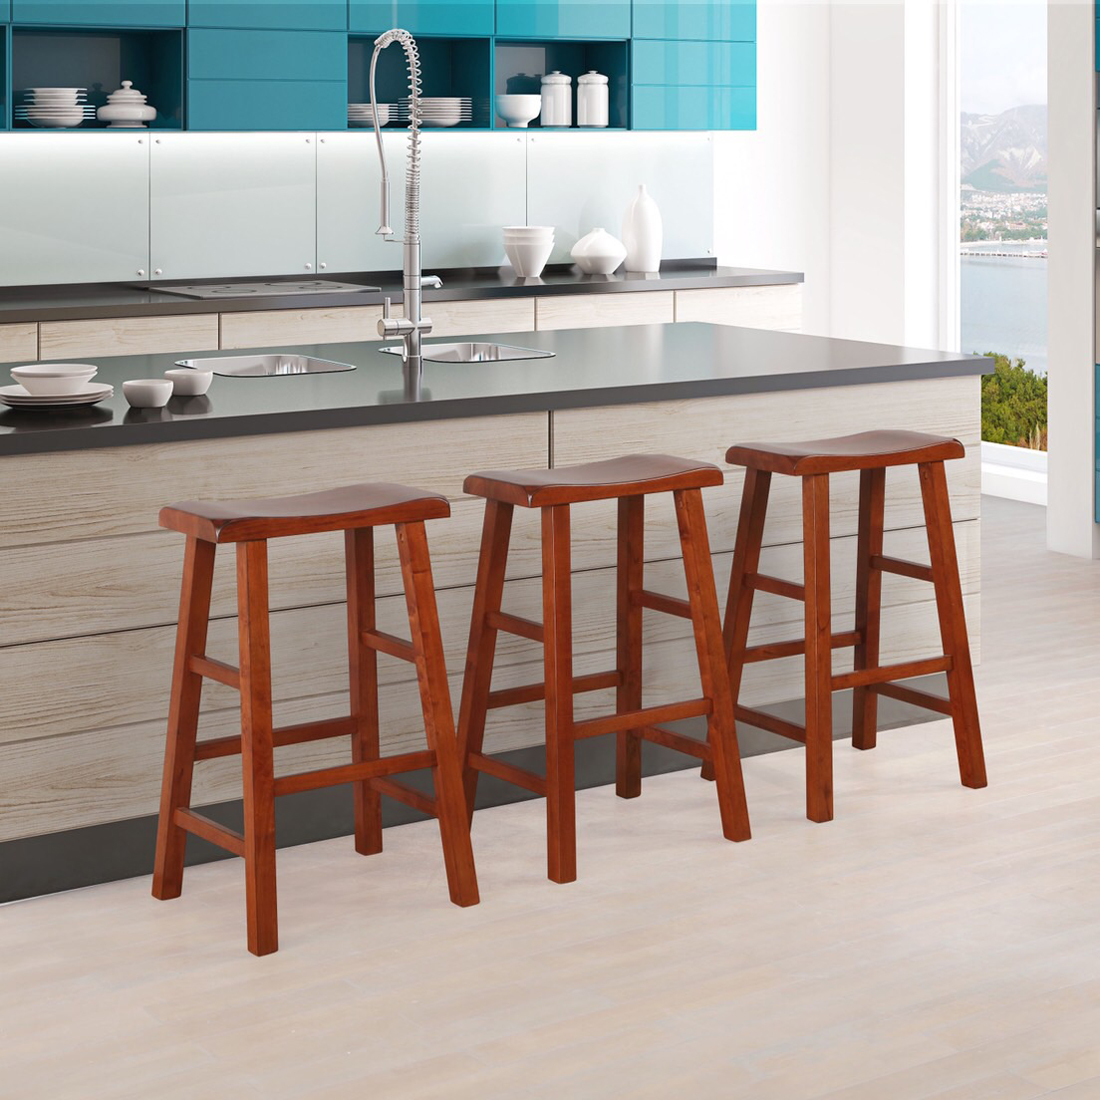 eHemco Heavy-Duty Solid Wood Saddle Seat Kitchen Counter Barstools, 29 Inches, Dark Oak, Set of 3 - image 4 of 6